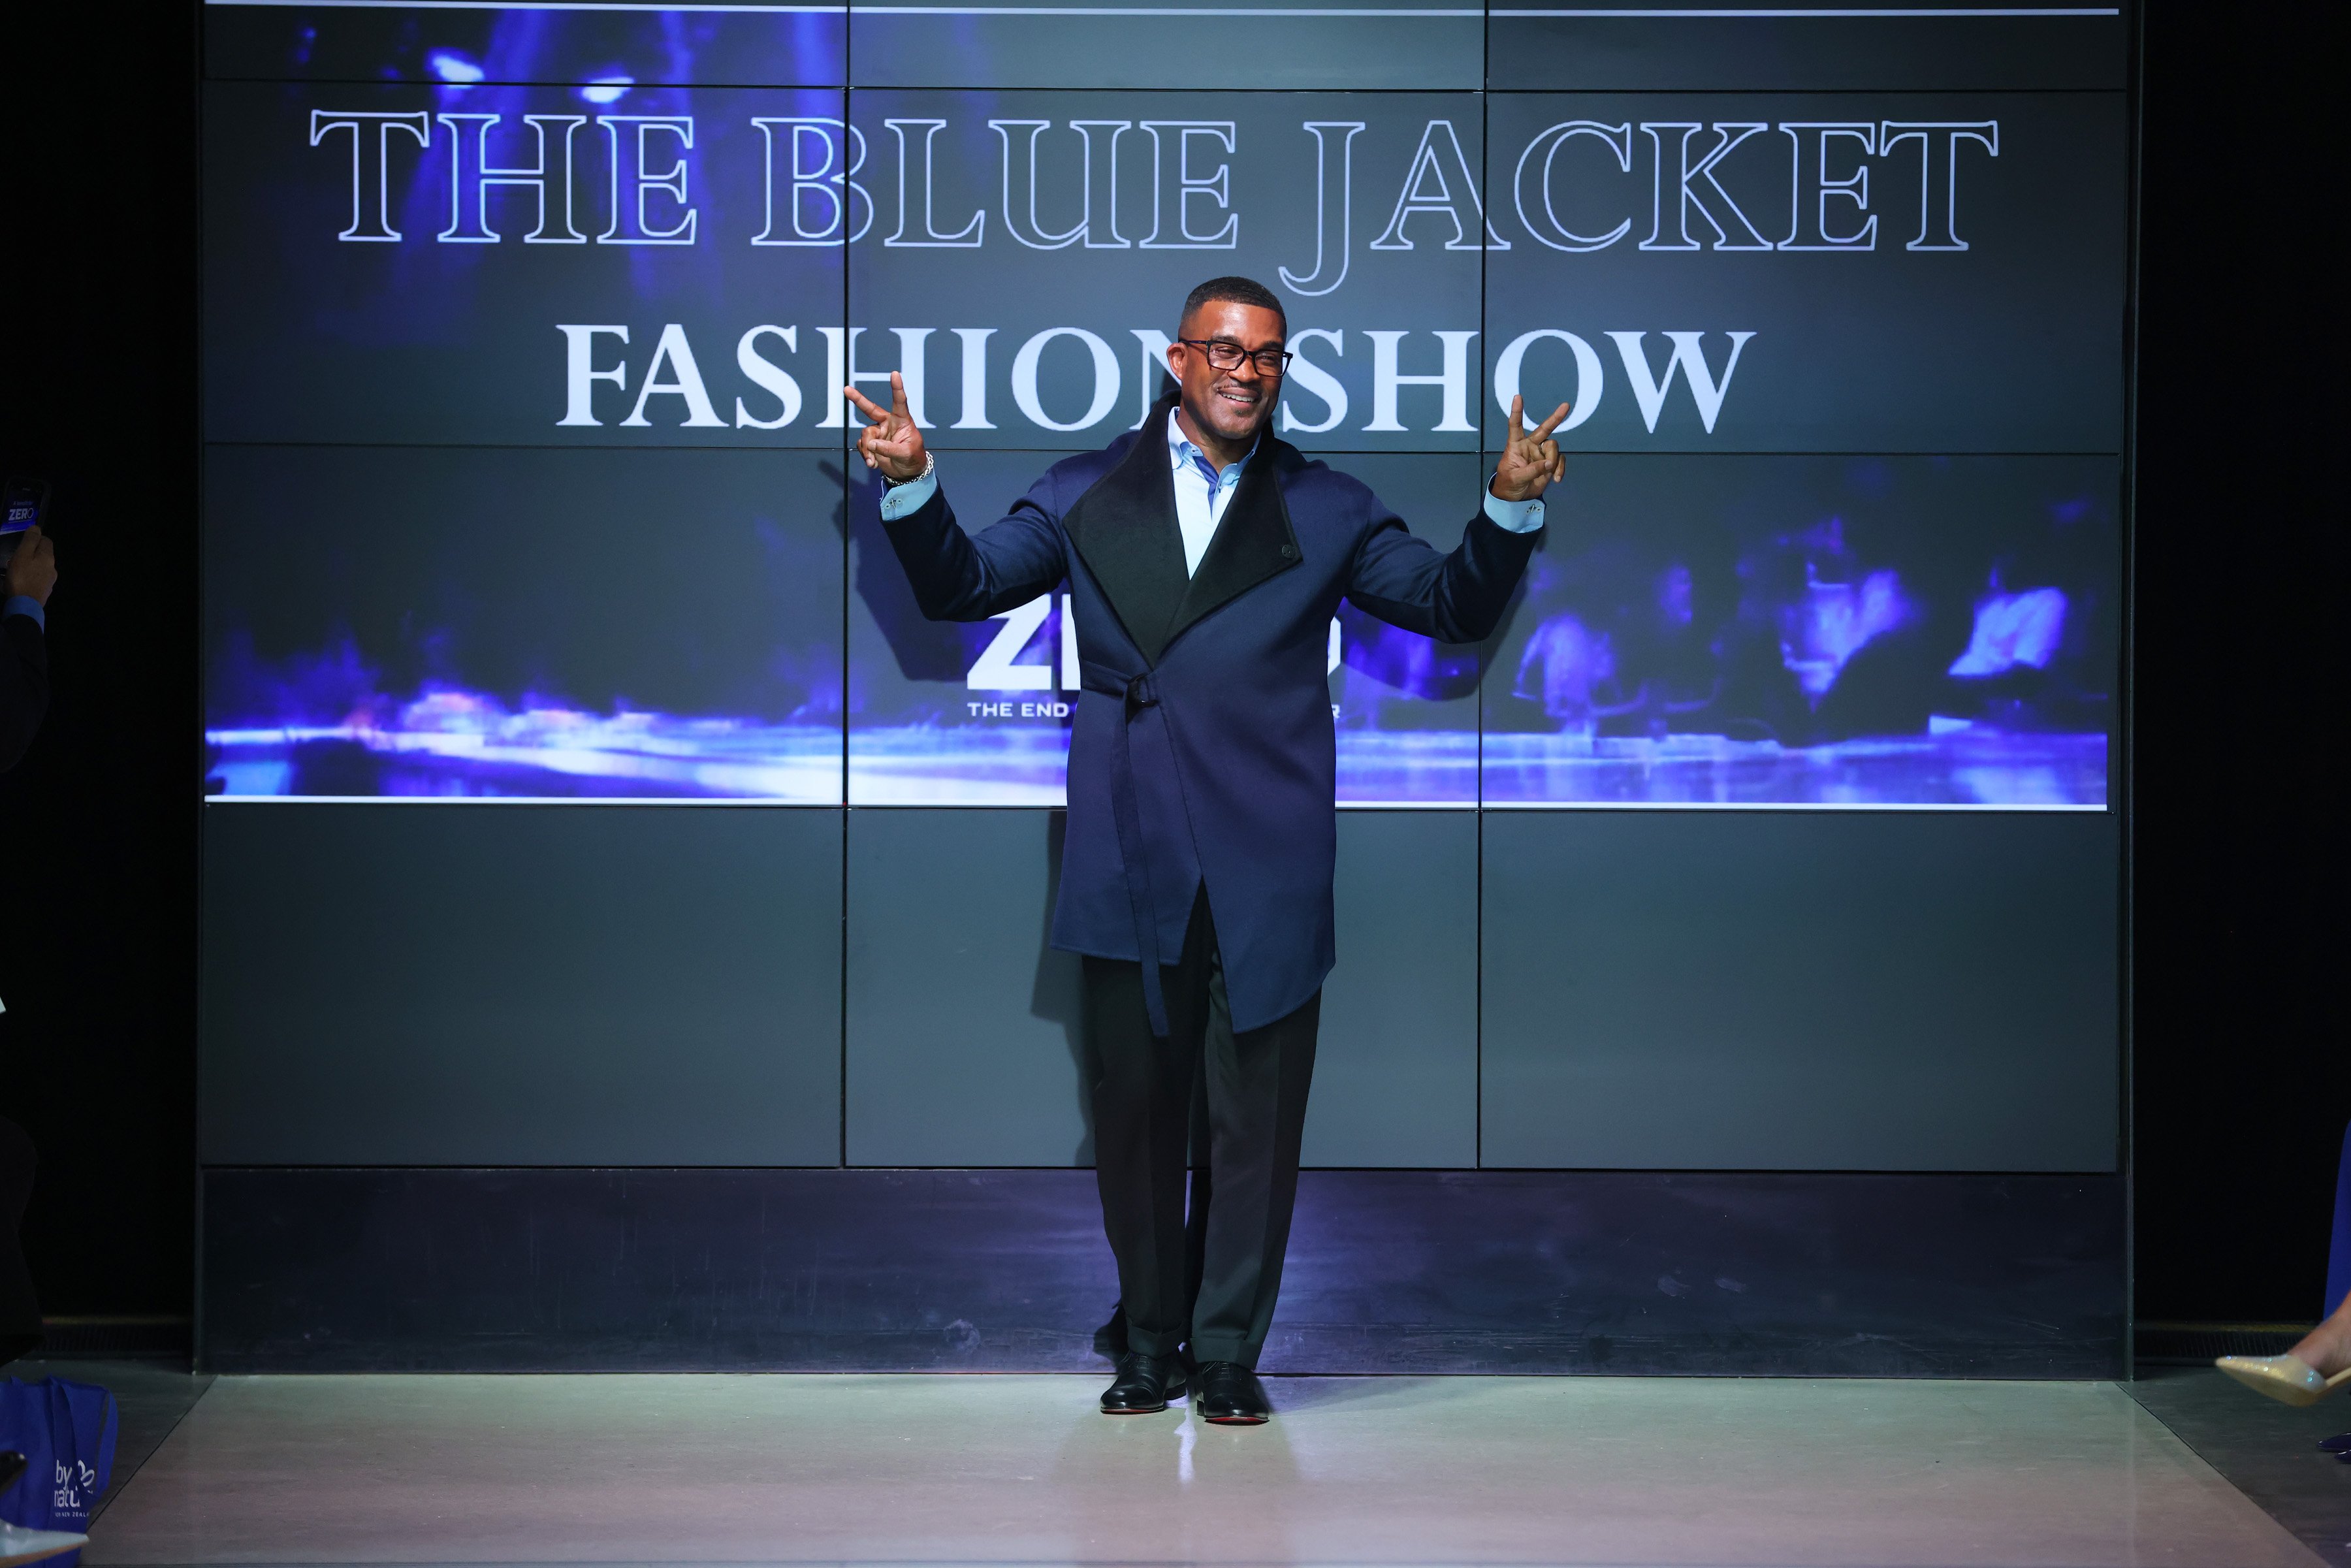 Man in blue jacket on fashion runway